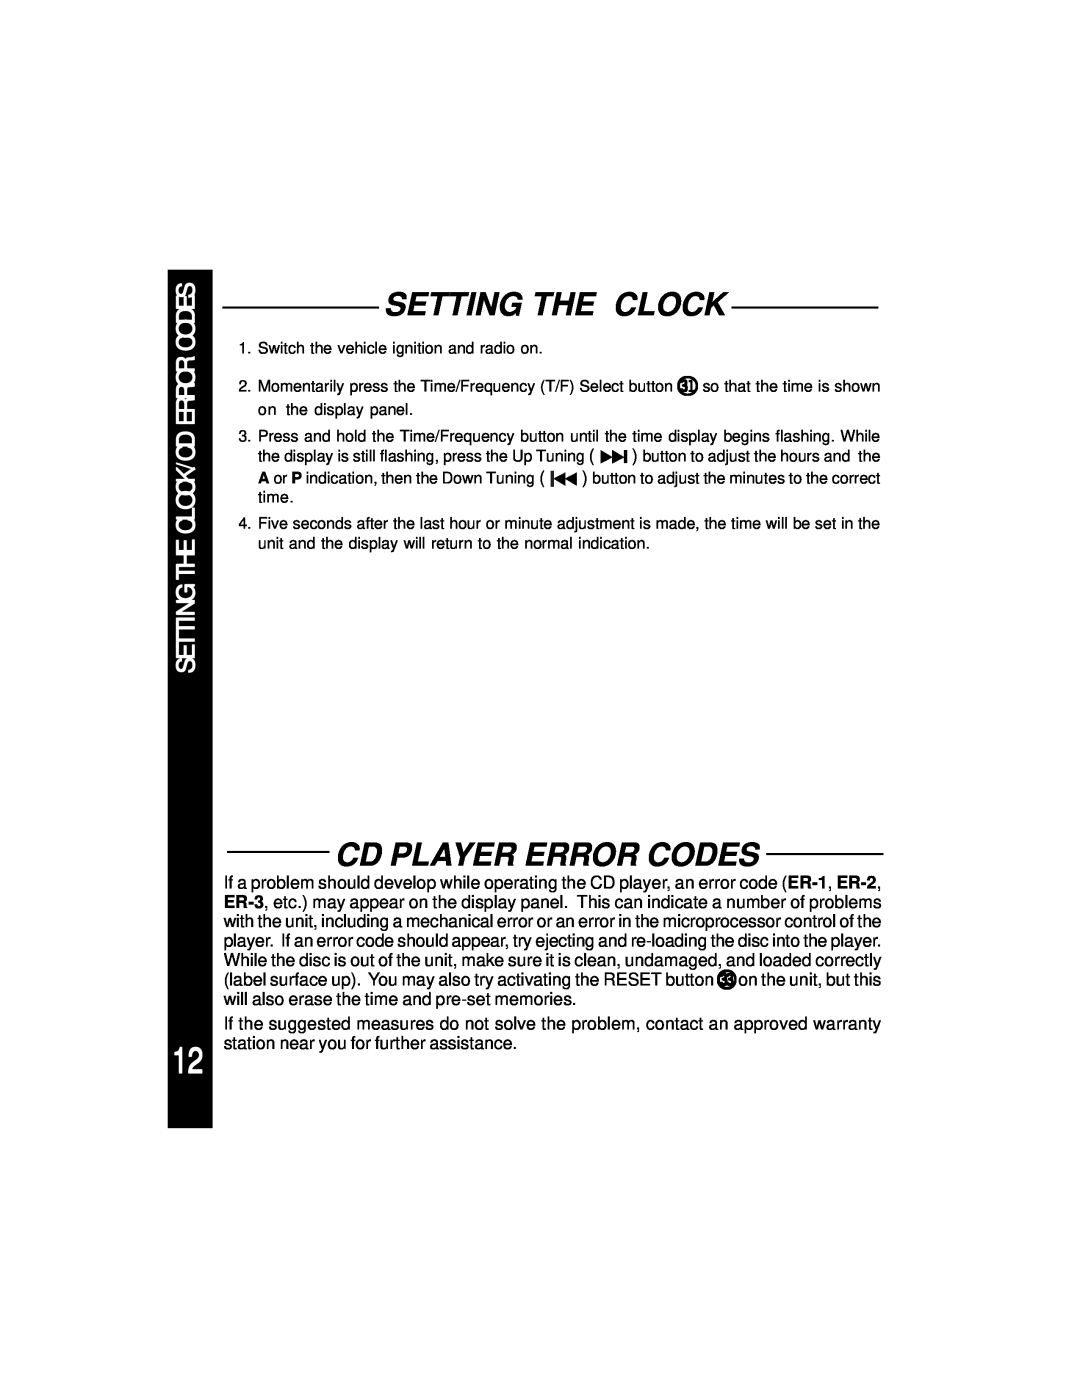 Audiovox ACD-28A manual Setting The Clock/Cd Error Codes, Cd Player Error Codes 